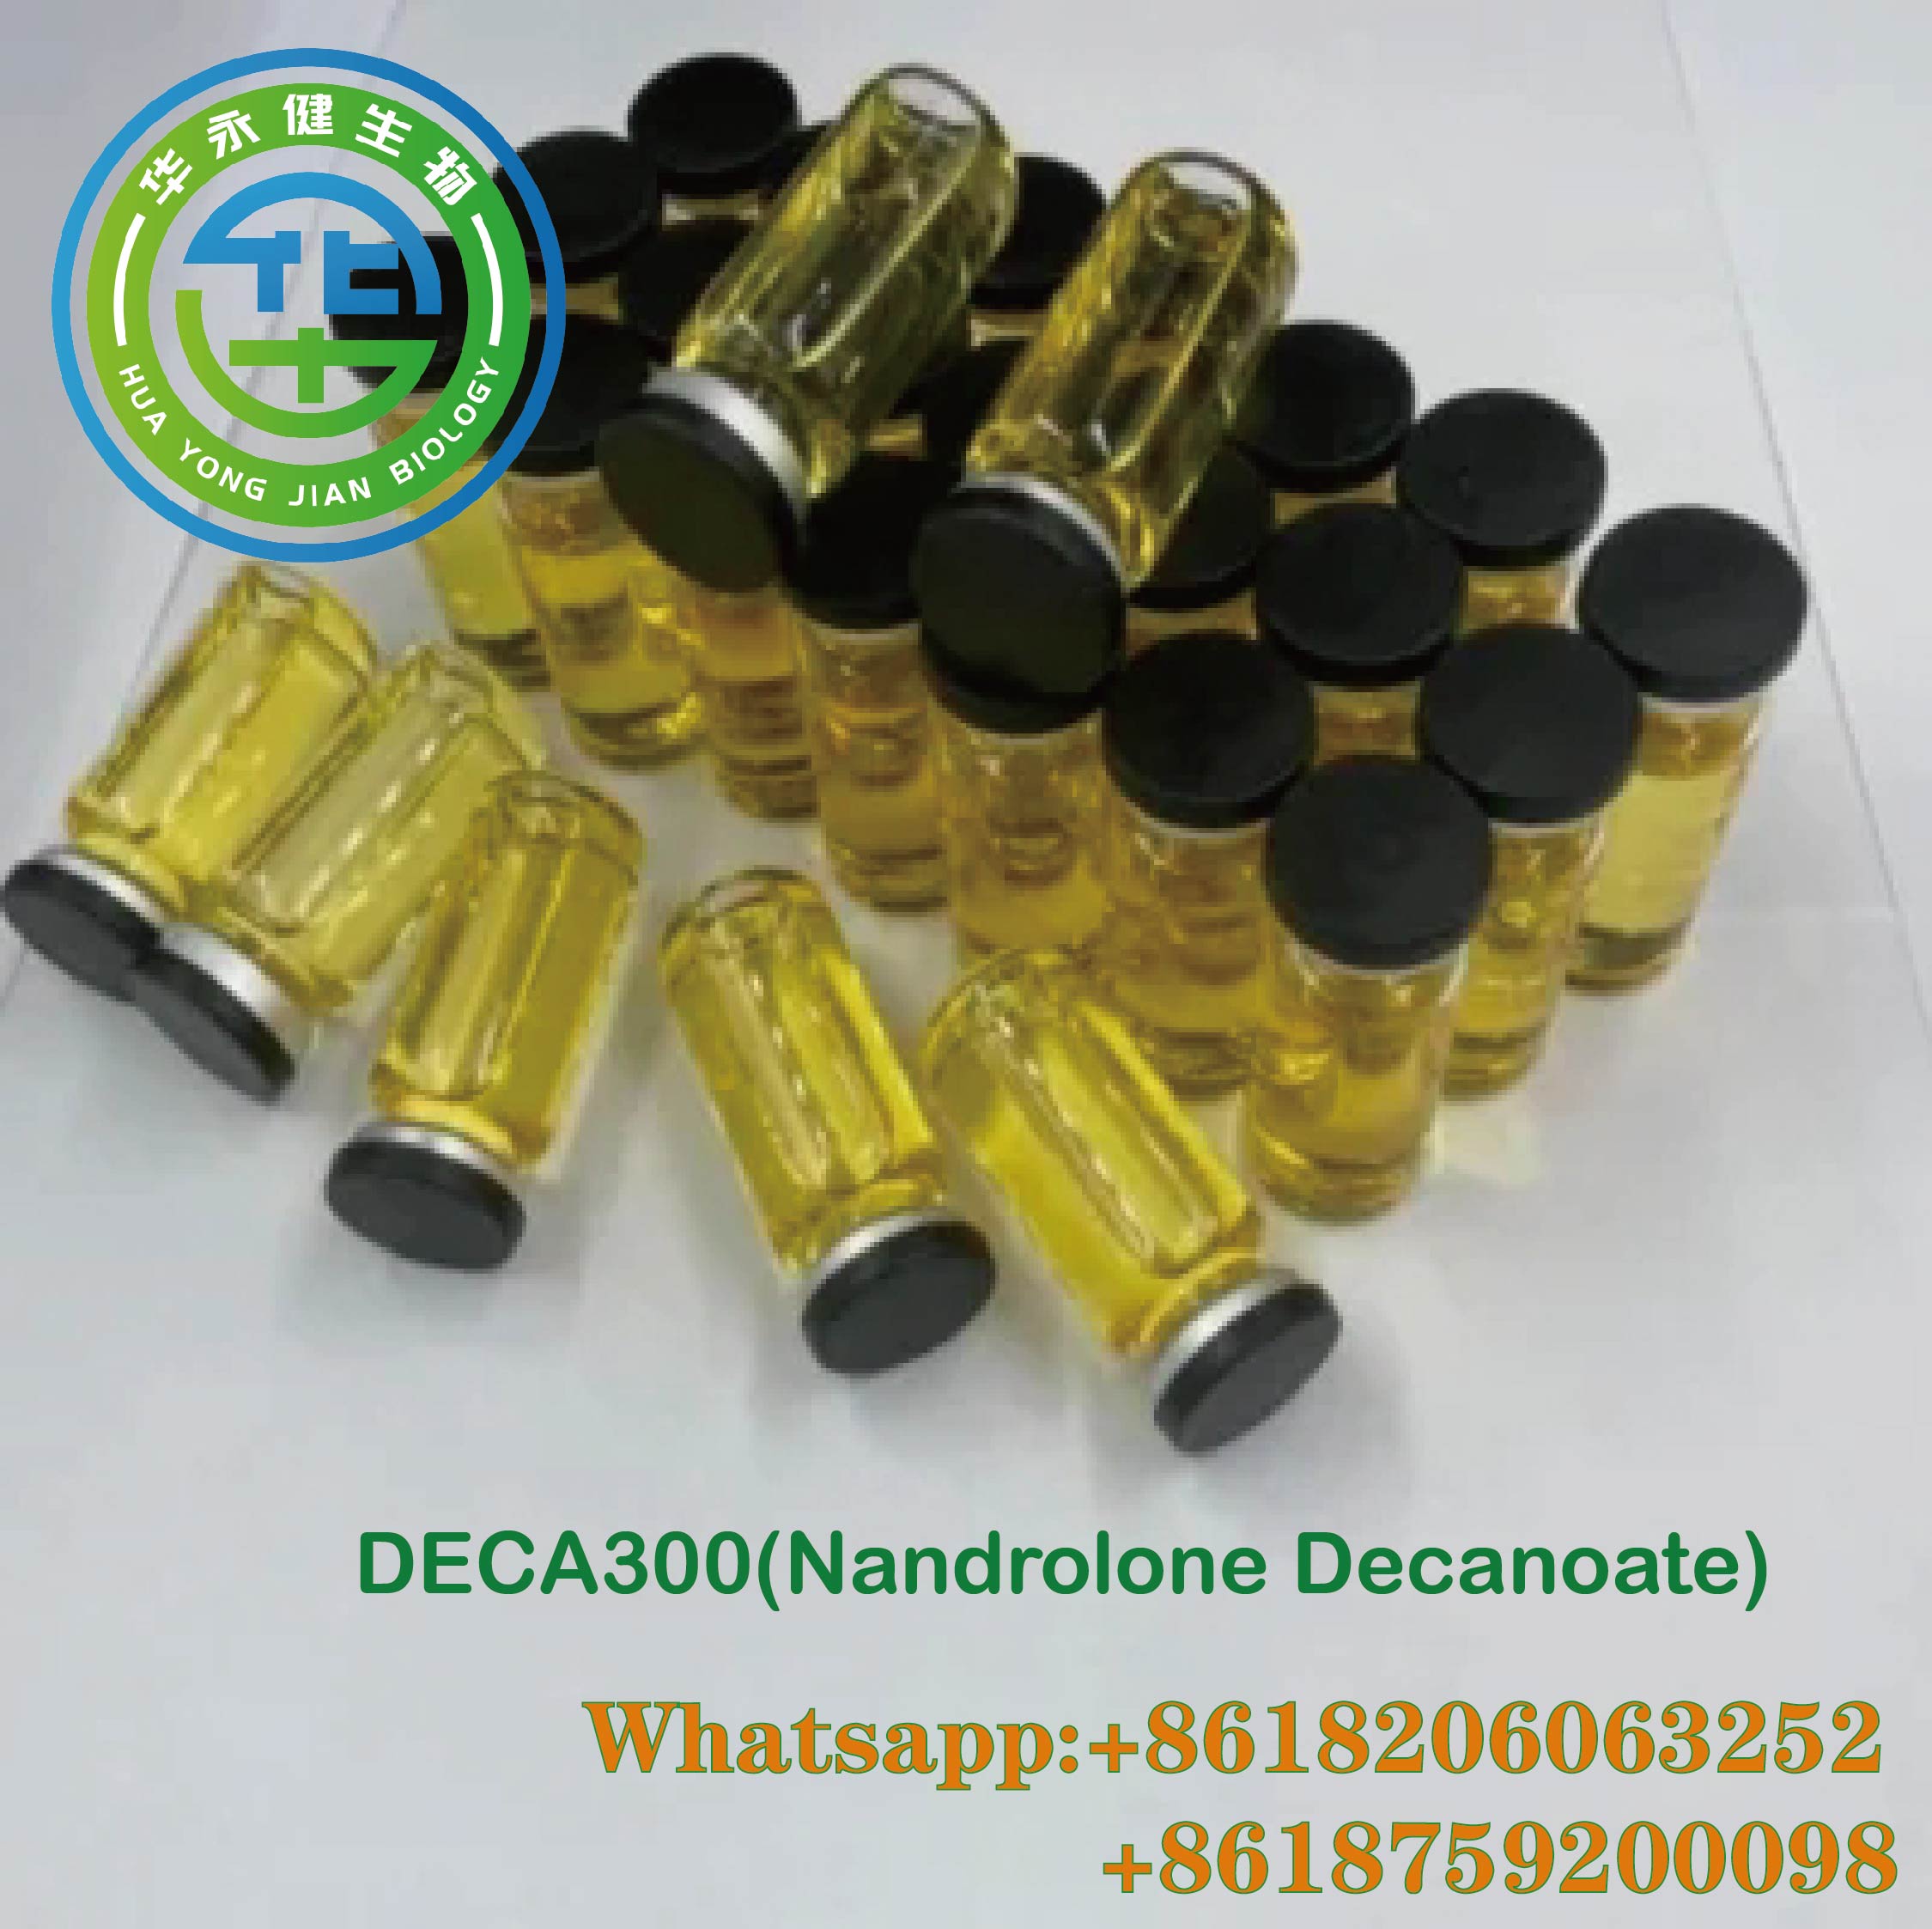 Syntetískir inndælanlegir vefaukandi sterar DECA300 300 mg/ml Gul litarolía Nandrolone Decanoate 300 Valin mynd